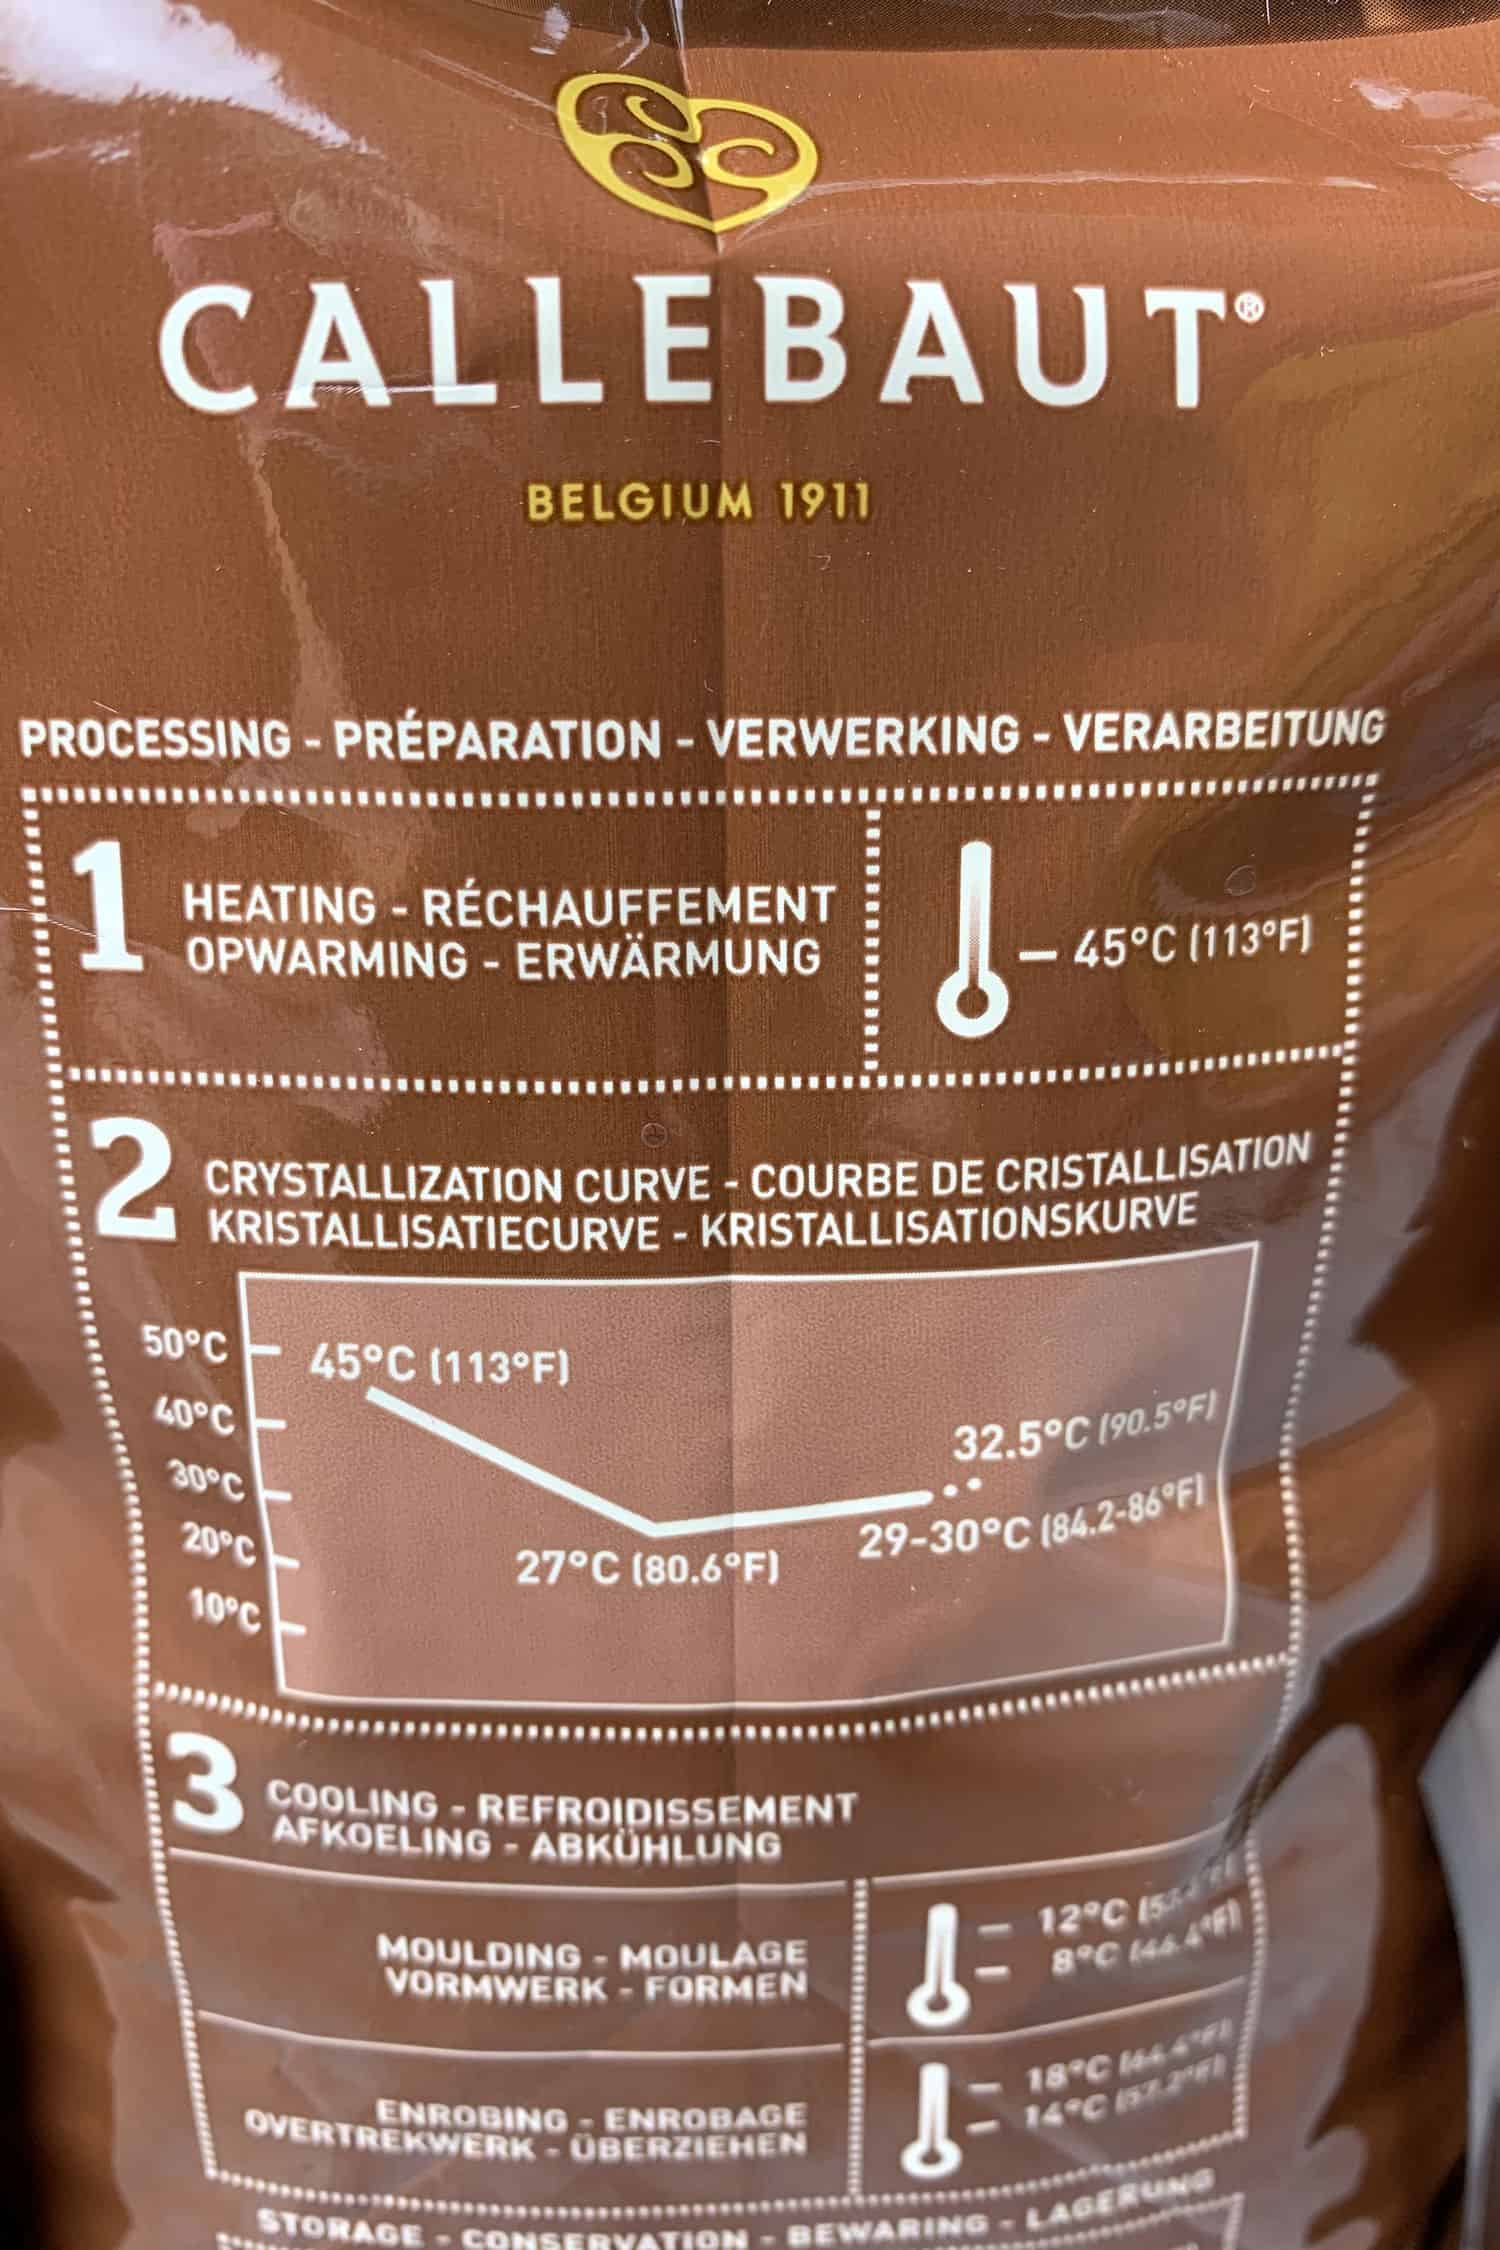 Callebaut chocolate instructions.